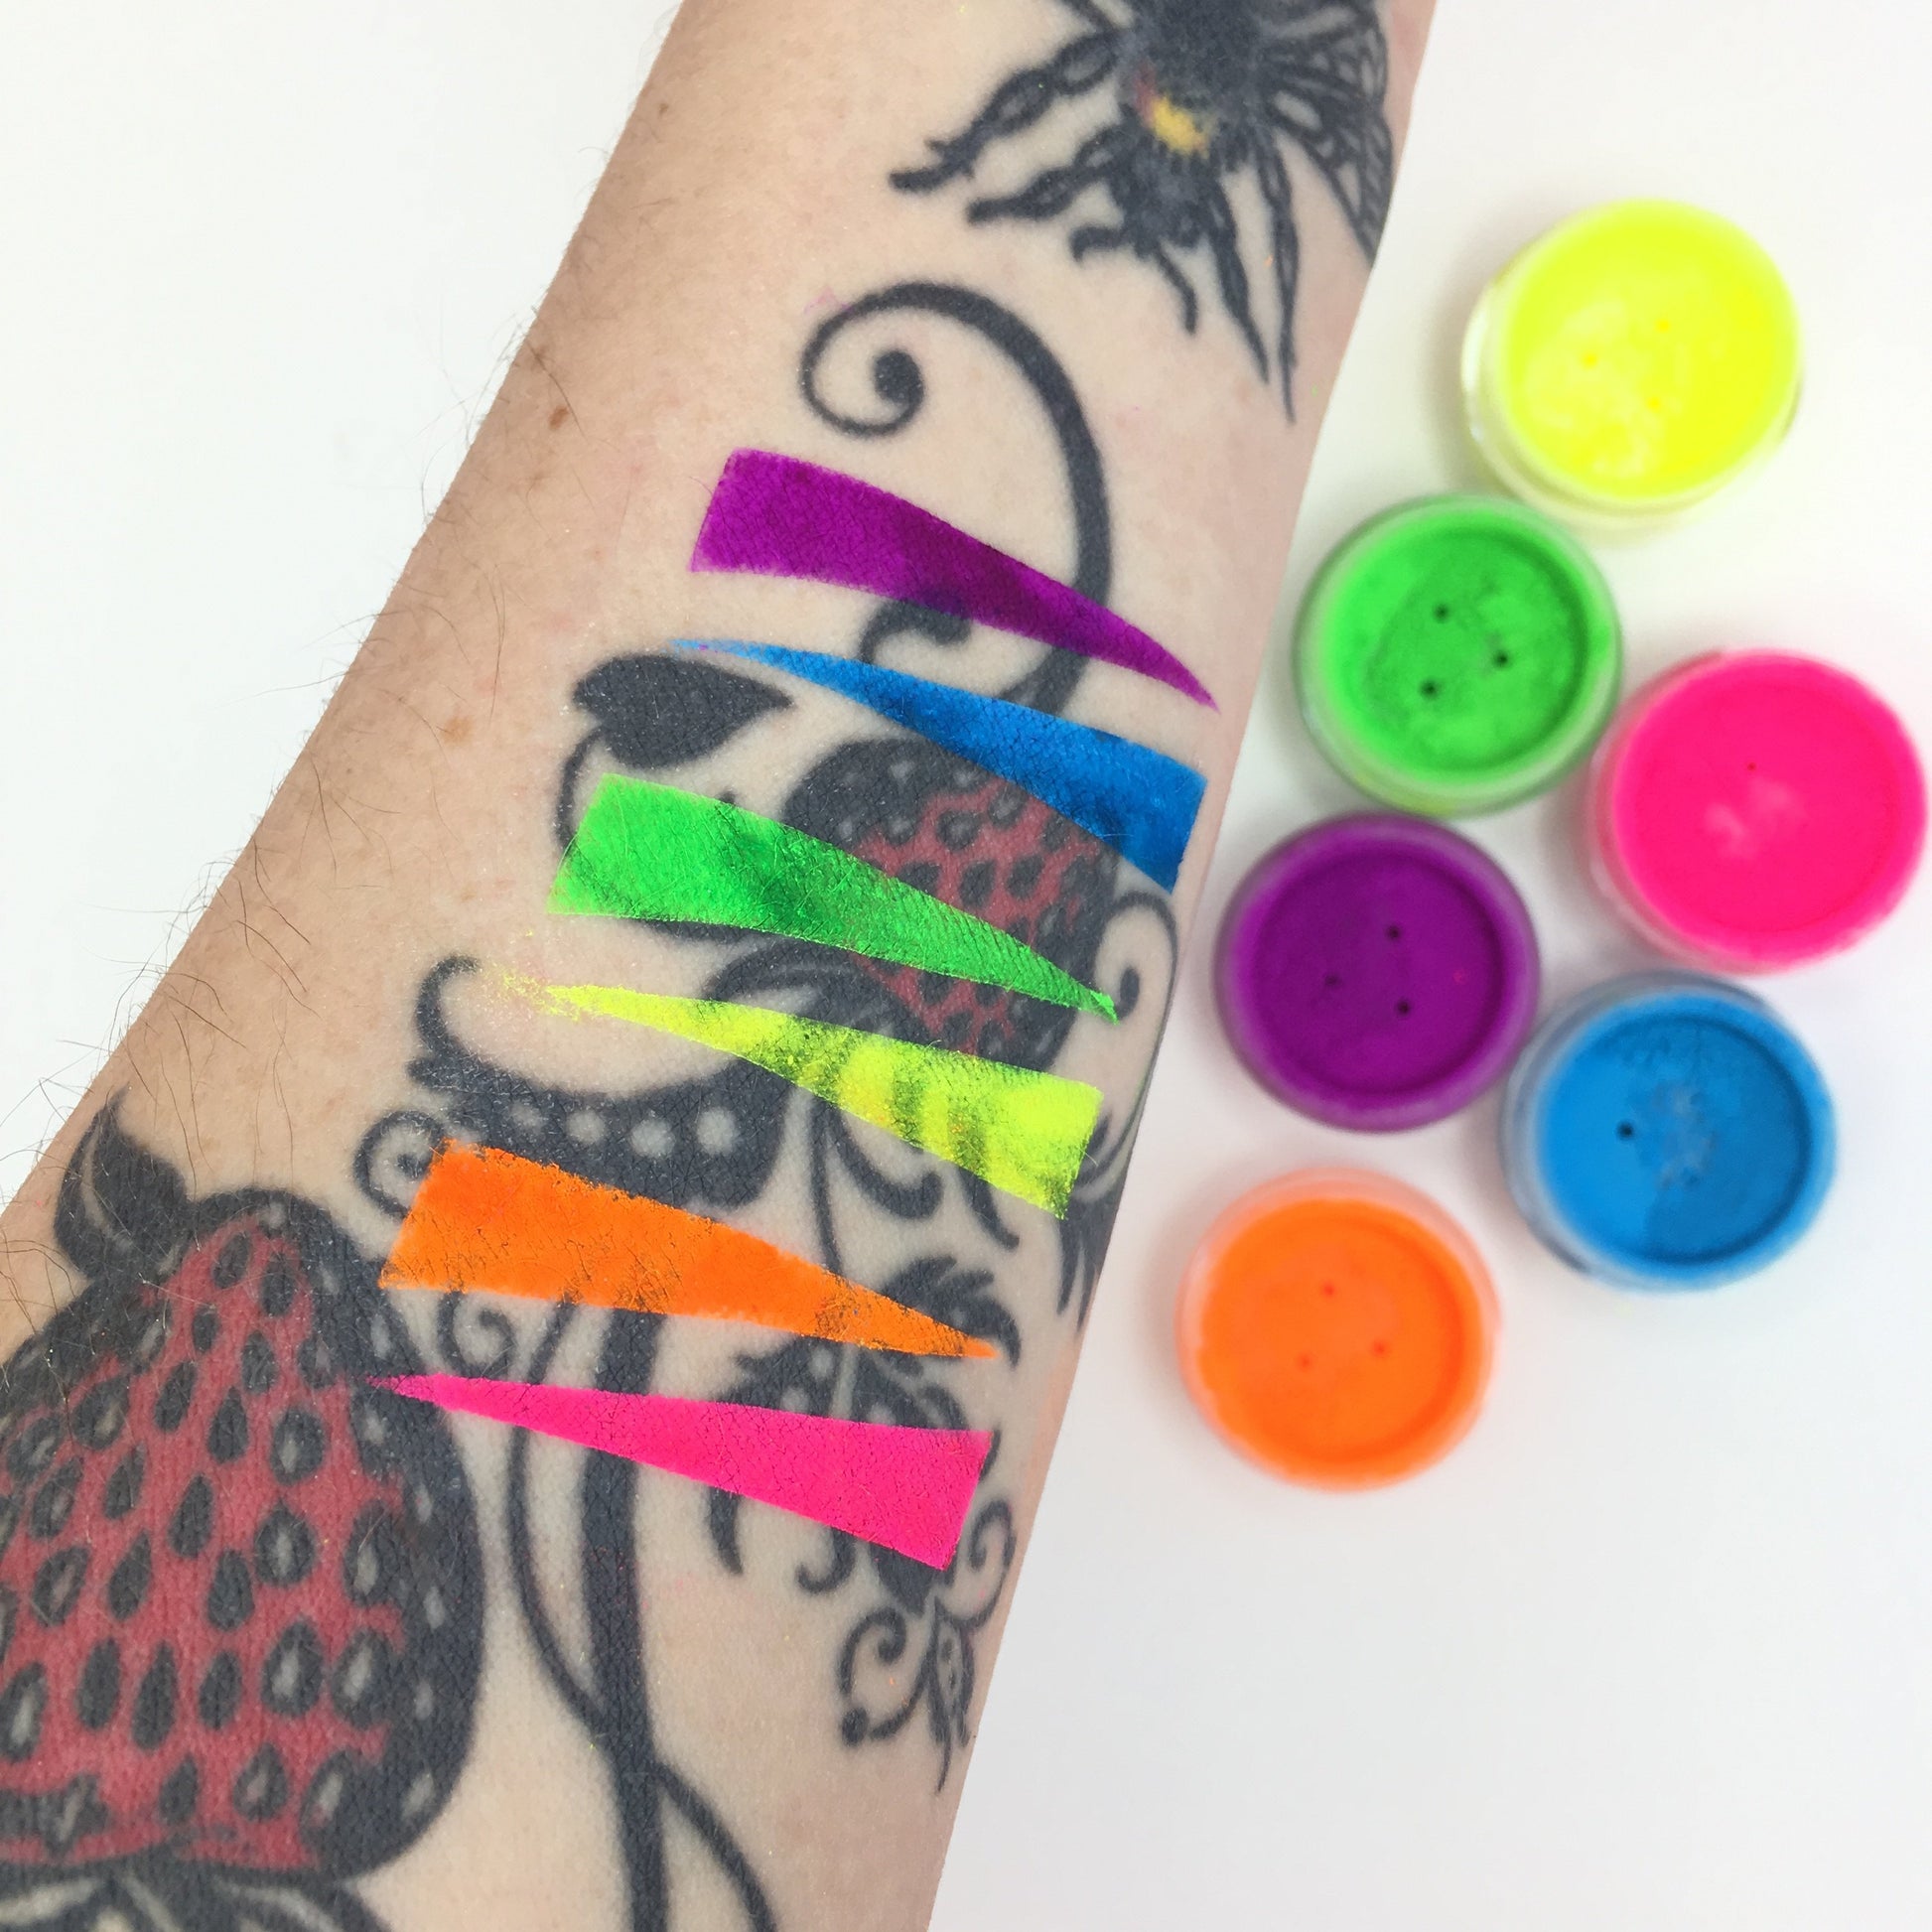 UV Neon Pigment Makeup - 6 Piece Bundle swatches